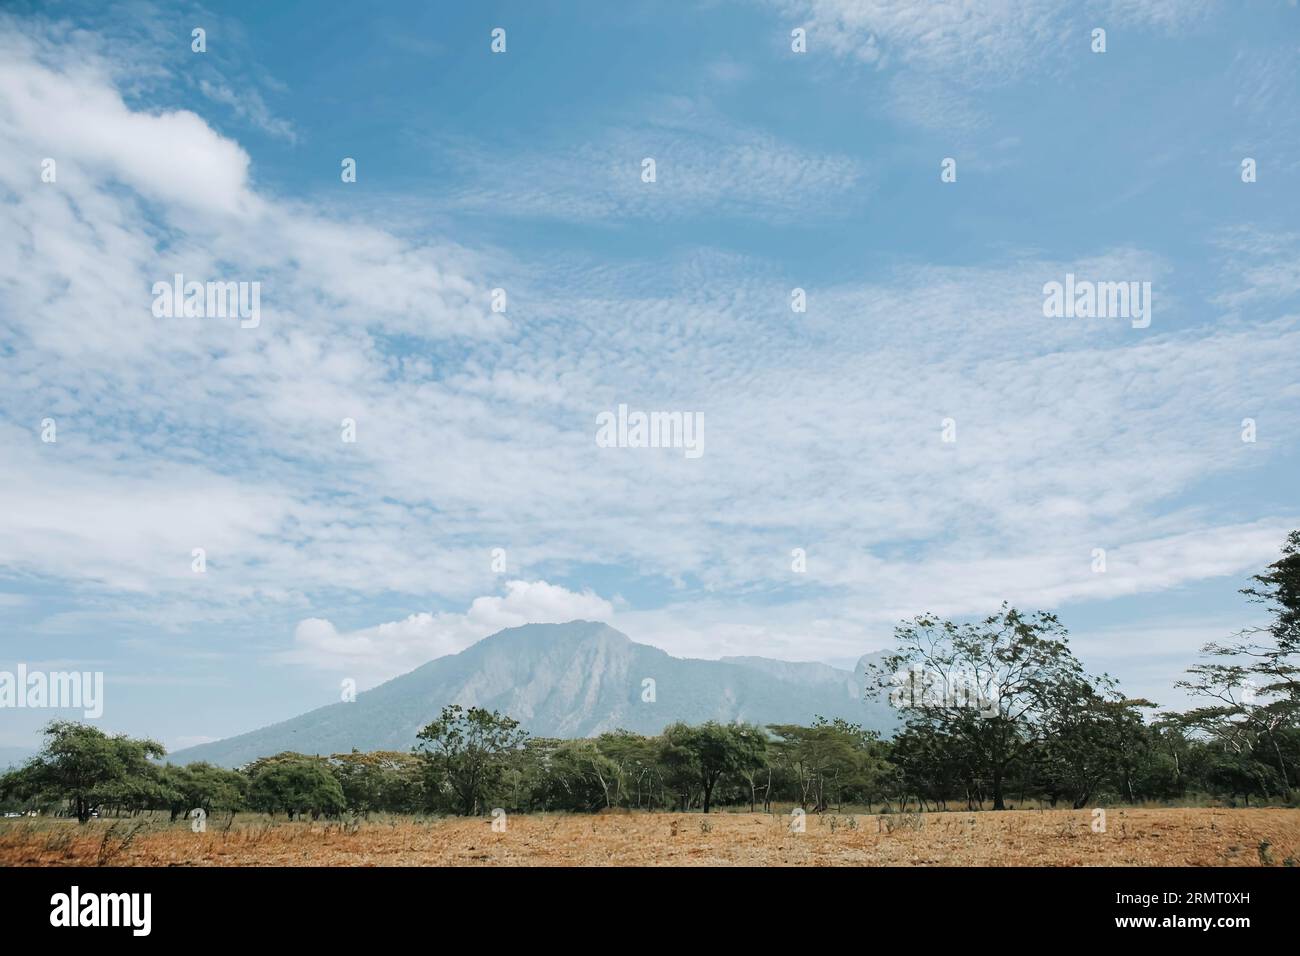 Savannah field with trees, mountains and clear blue sky of Baluran National Park or Taman Nasional Baluran in Banyuwangi, Jawa Timur, Indonesia Stock Photo